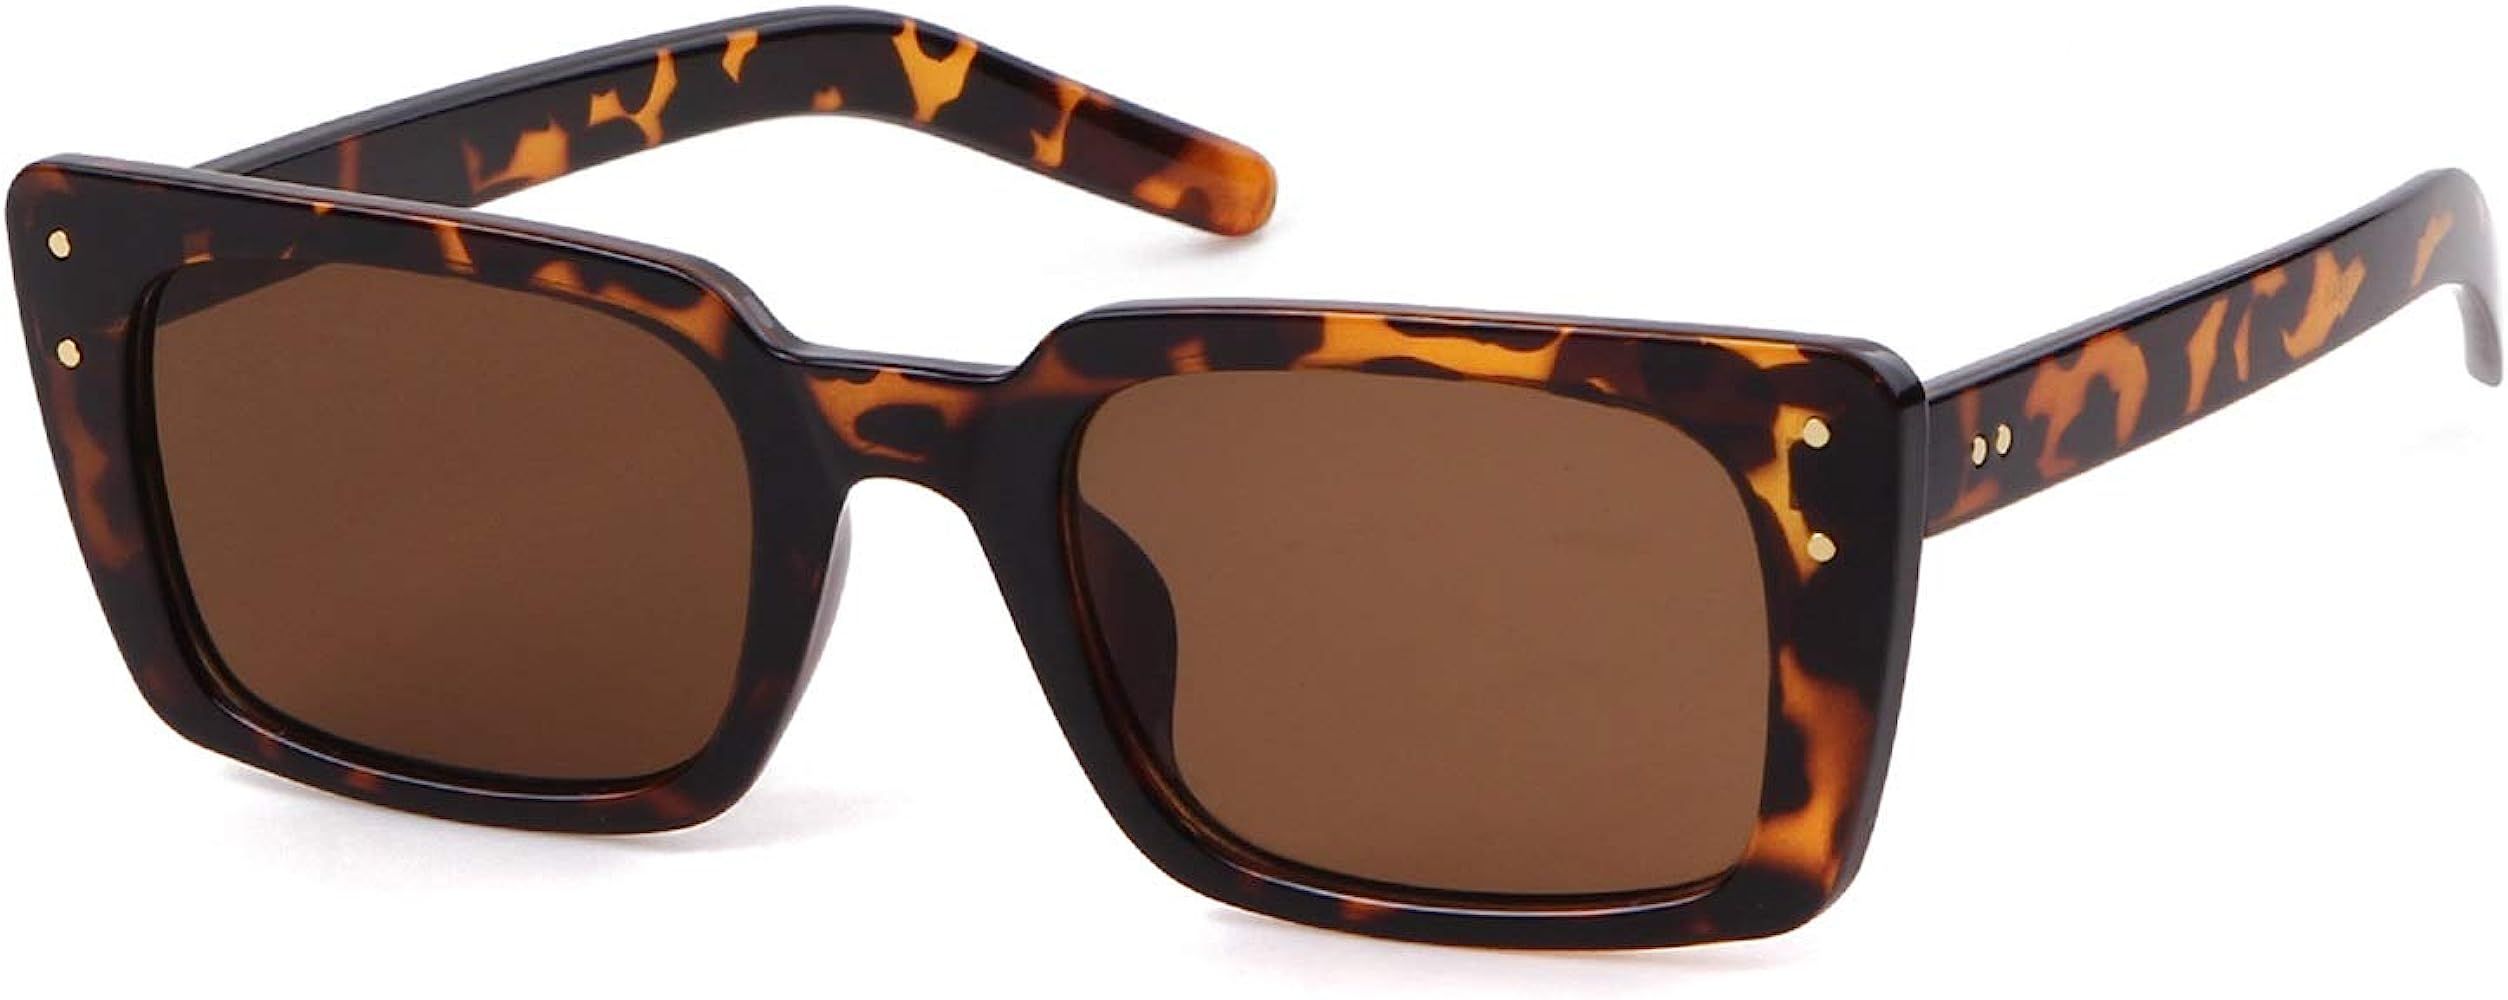 GIFIORE Retro Square Sunglasses Women 90s Vintage Small Plastic Tortoise Shell Frame Glasses with Ri | Amazon (US)